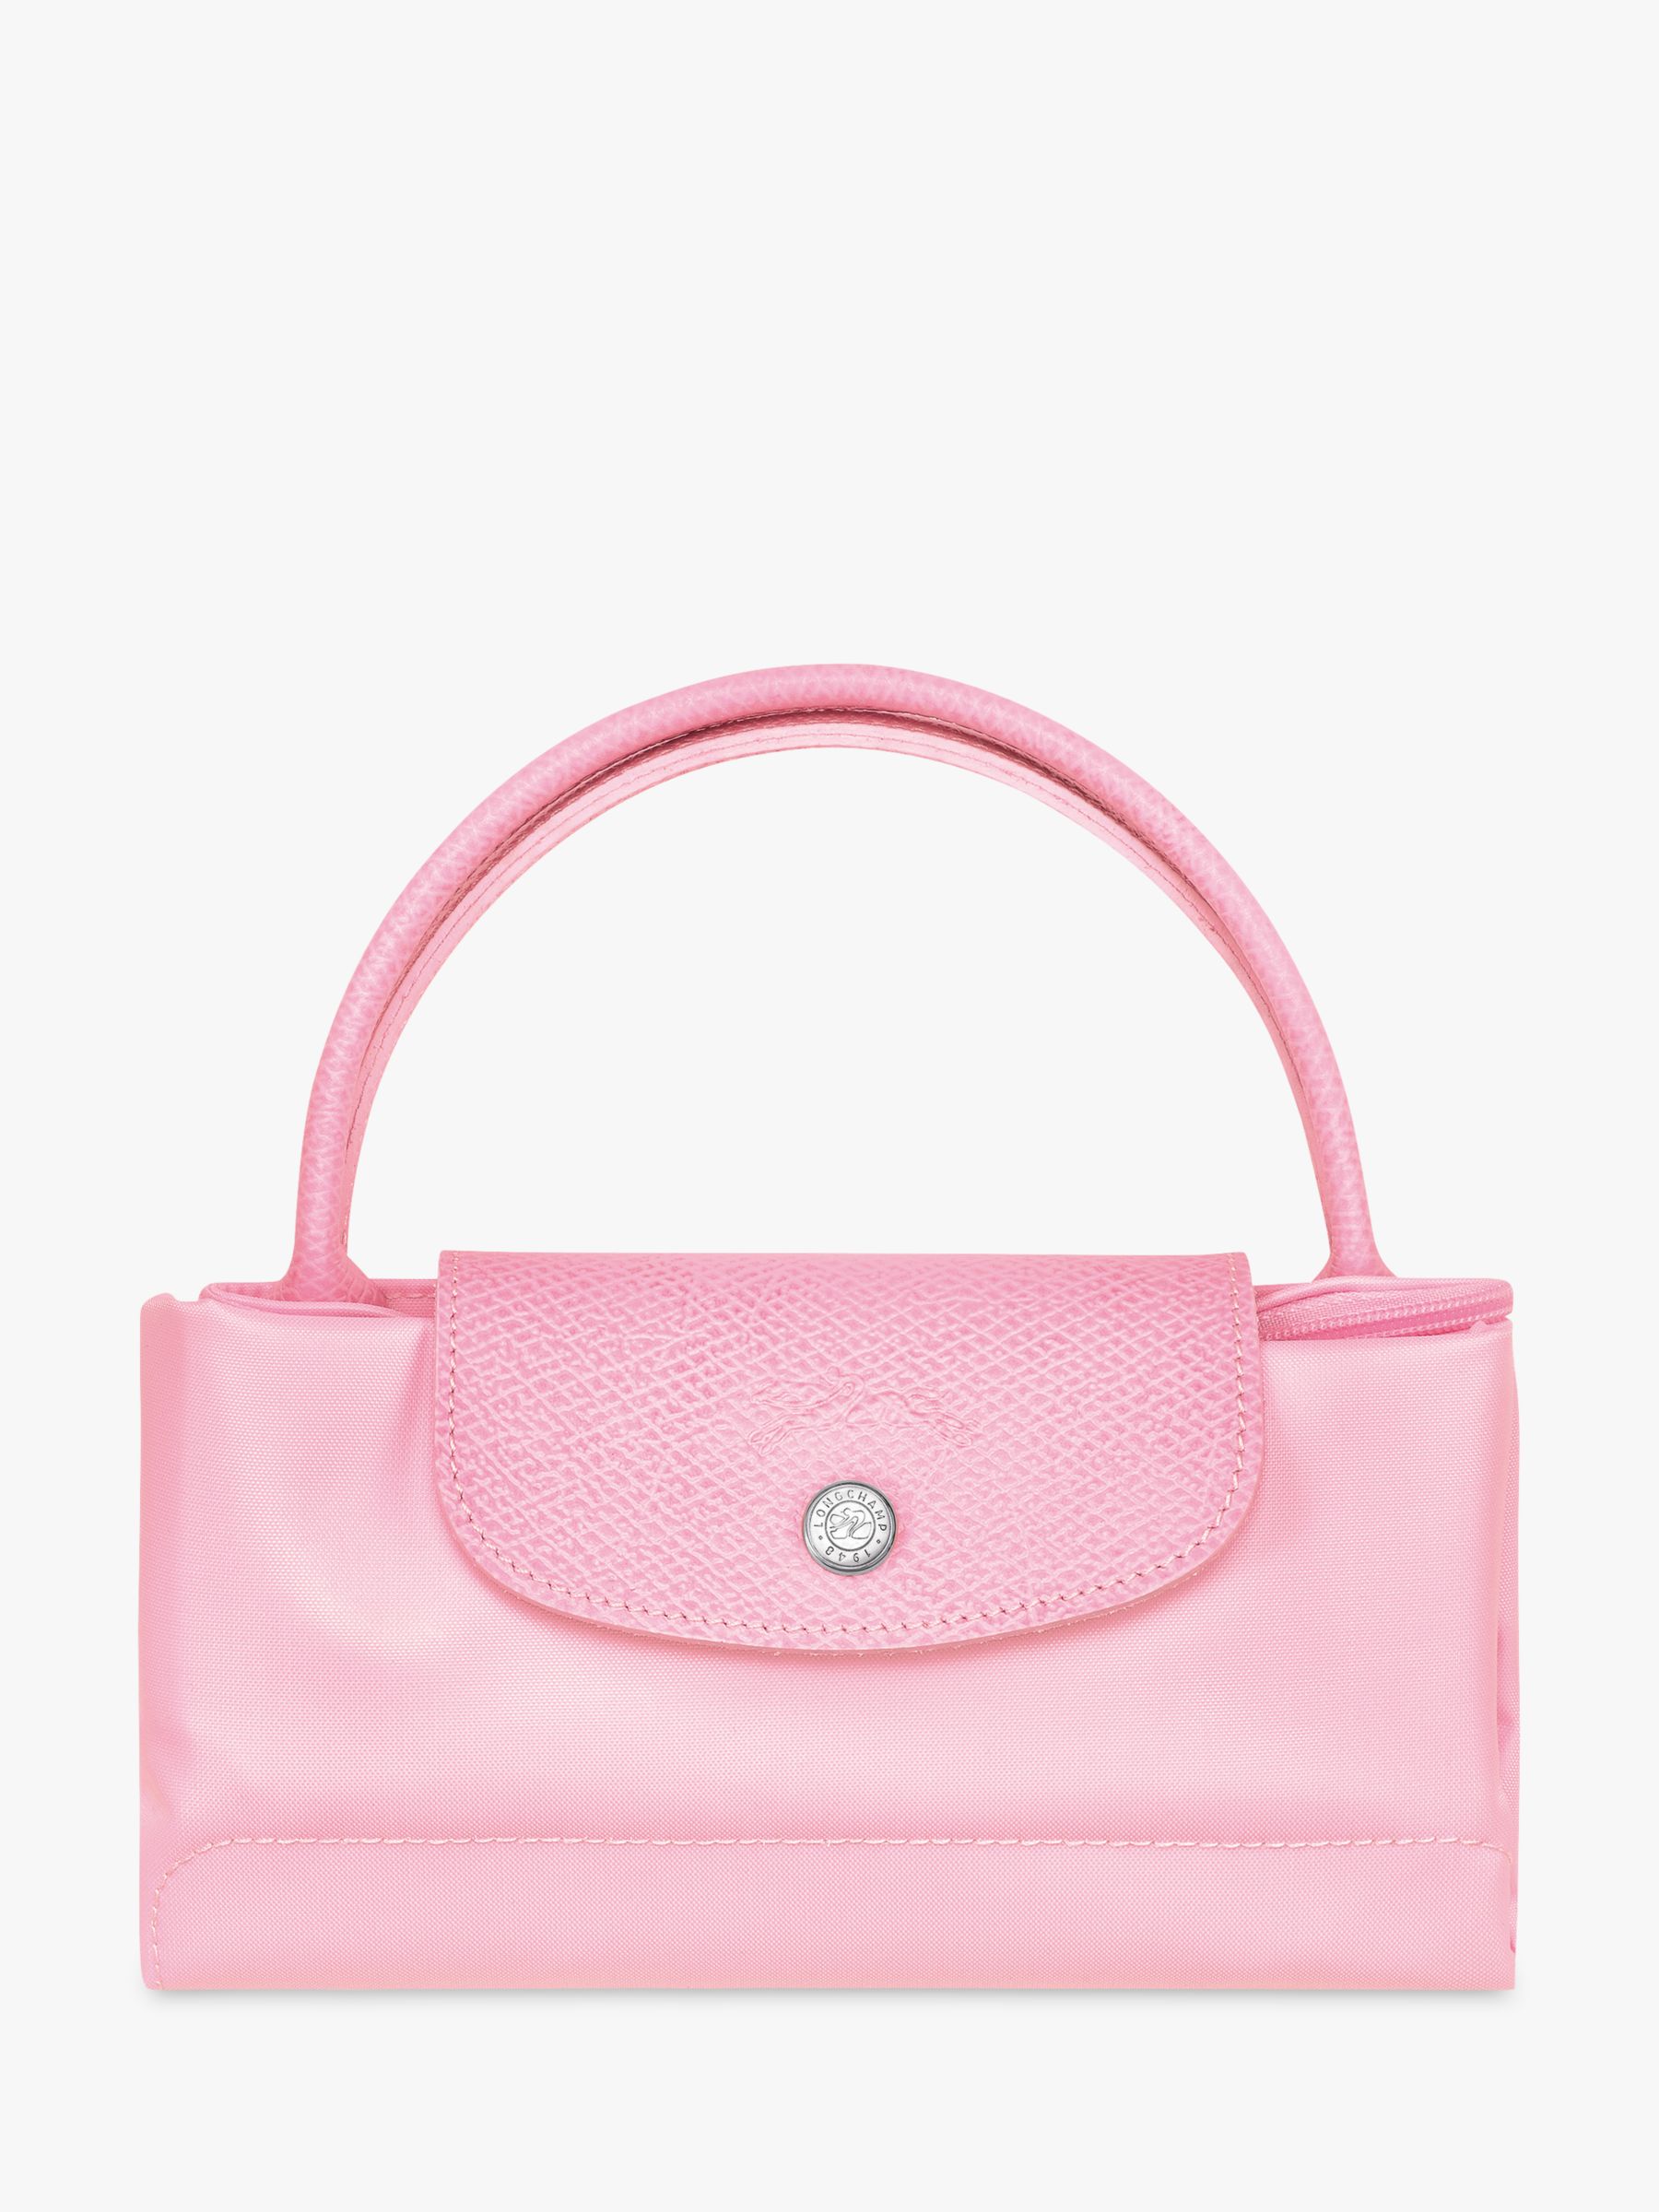 Longchamp Le Pliage Filet Mini Top Handle Bag, Pink at John Lewis